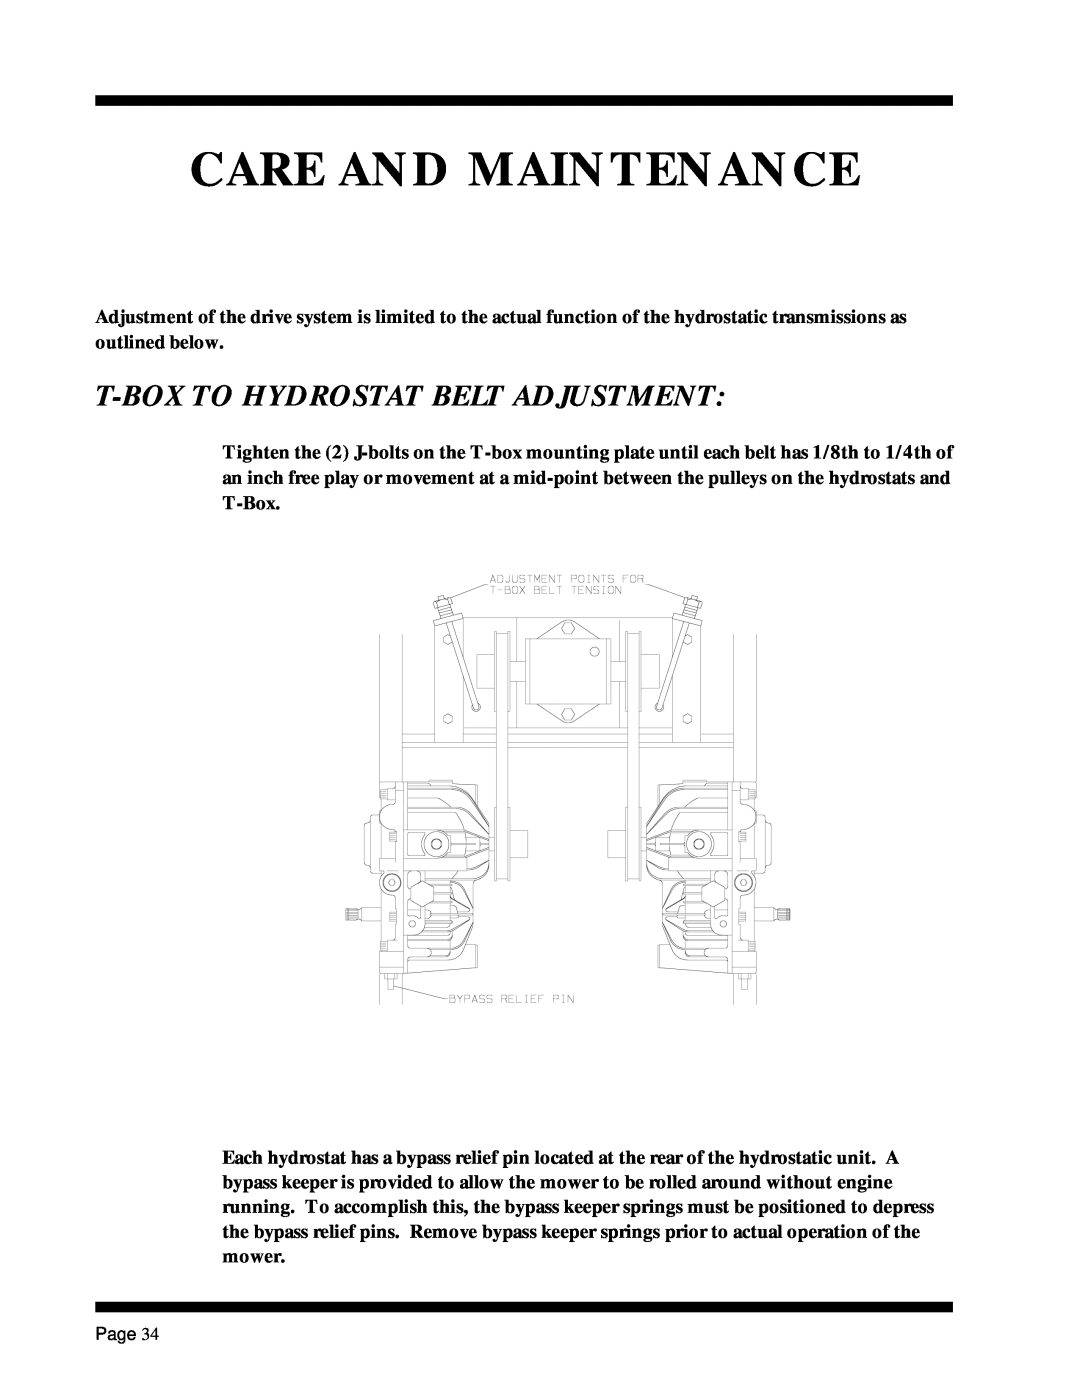 Dixon ZTR 5017Twin manual T-Box To Hydrostat Belt Adjustment, Care And Maintenance 